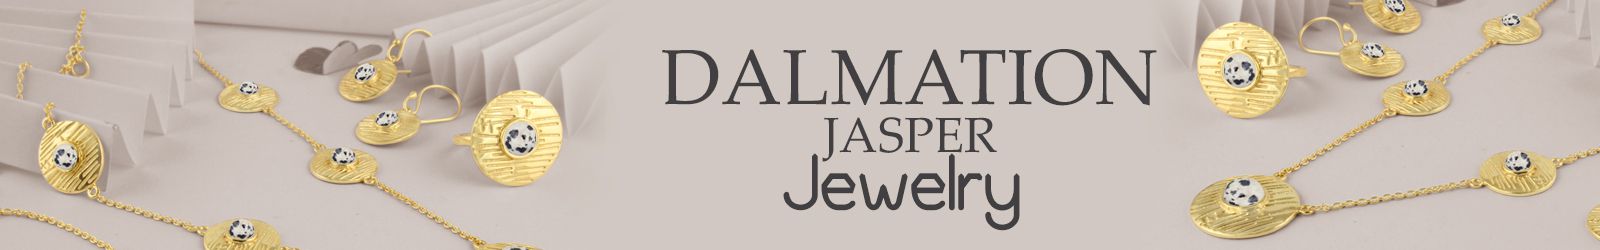 Silver Dalmatian Jasper Jewelry Wholesale Supplier